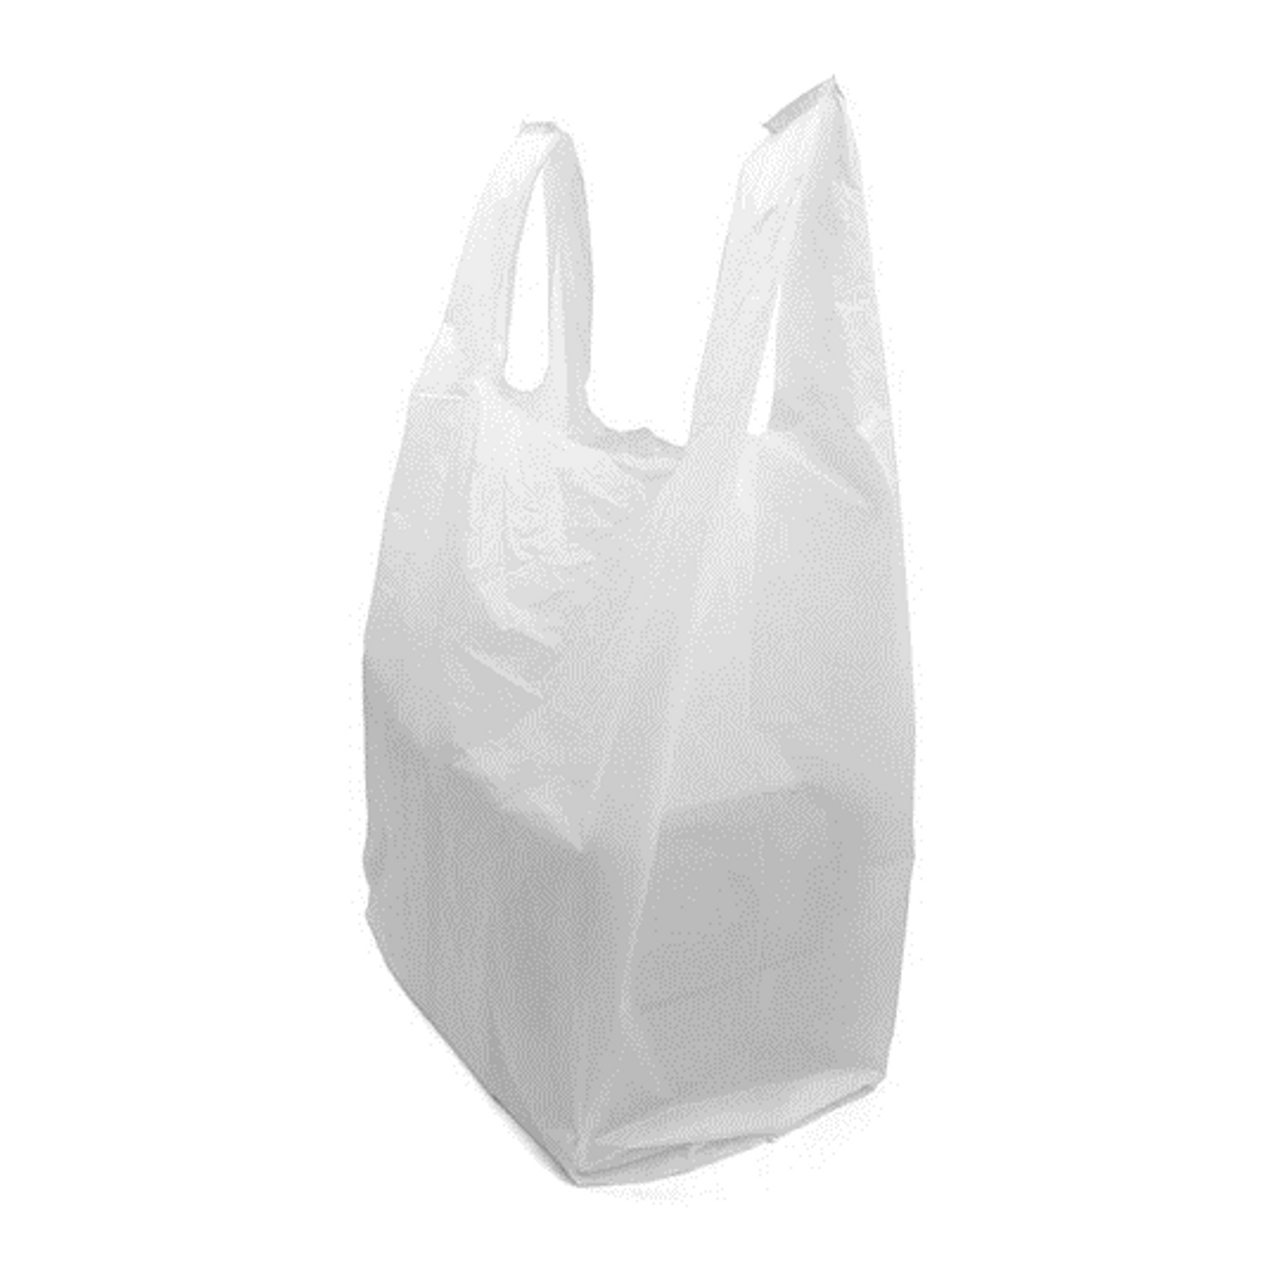 T-Shirt Plastic Shopping Bags